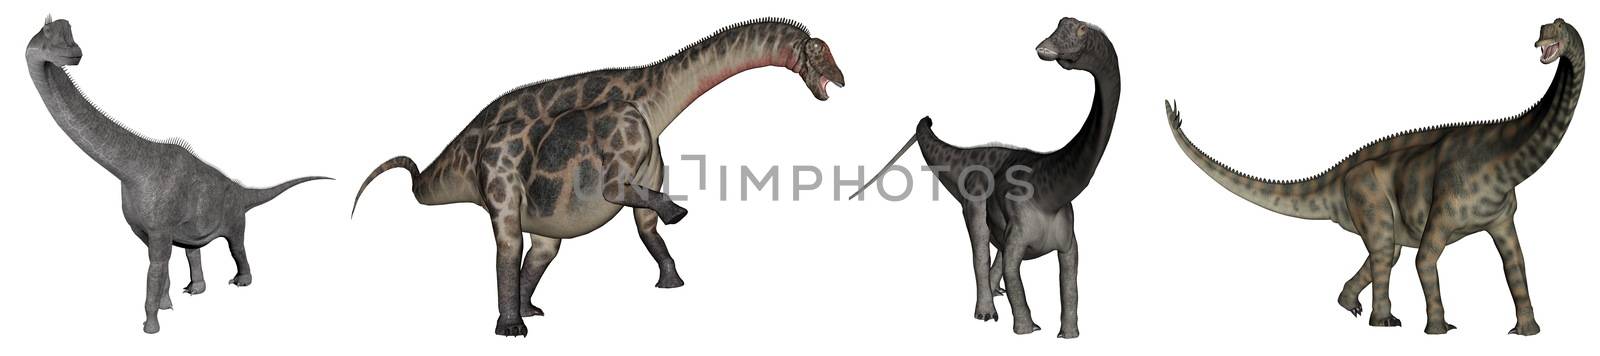 Jurassic sauropod dinosaurs : brachiosaurus, dicraeosaurus, diplodocus and spinophorosaurus - 3D render